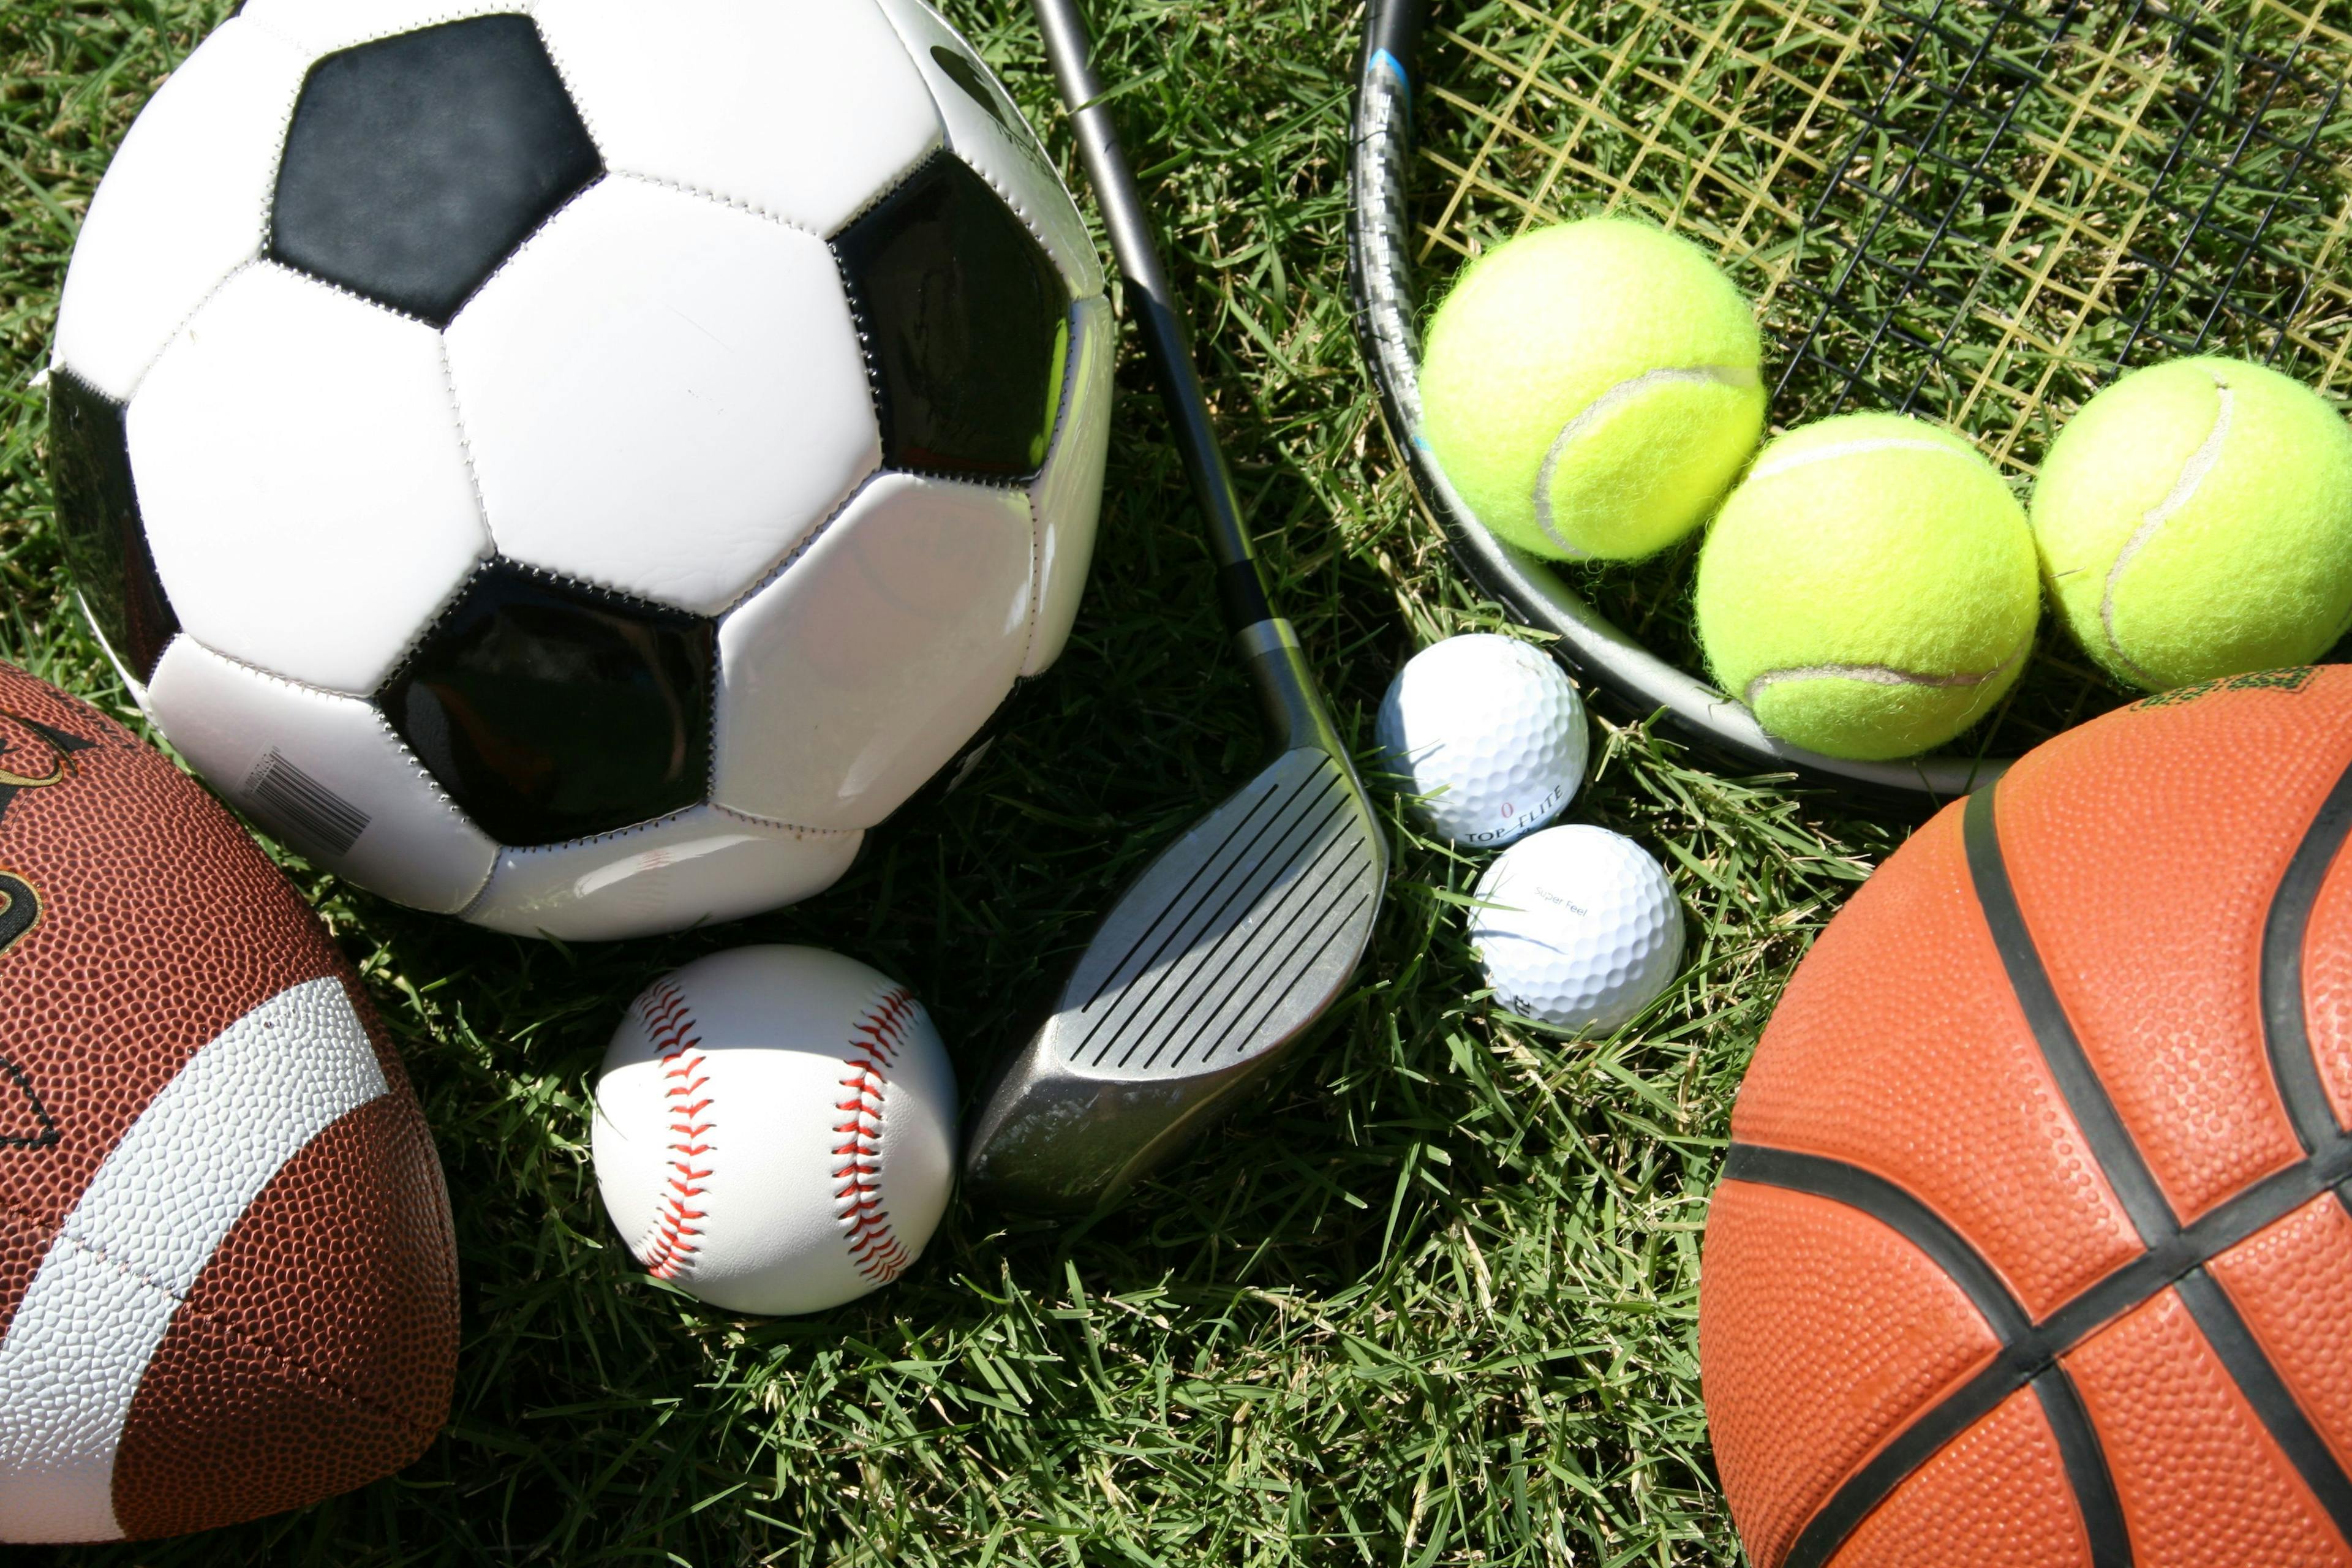 Sports Equipment | Image Credit: © JJAVA - stock.adobe.com